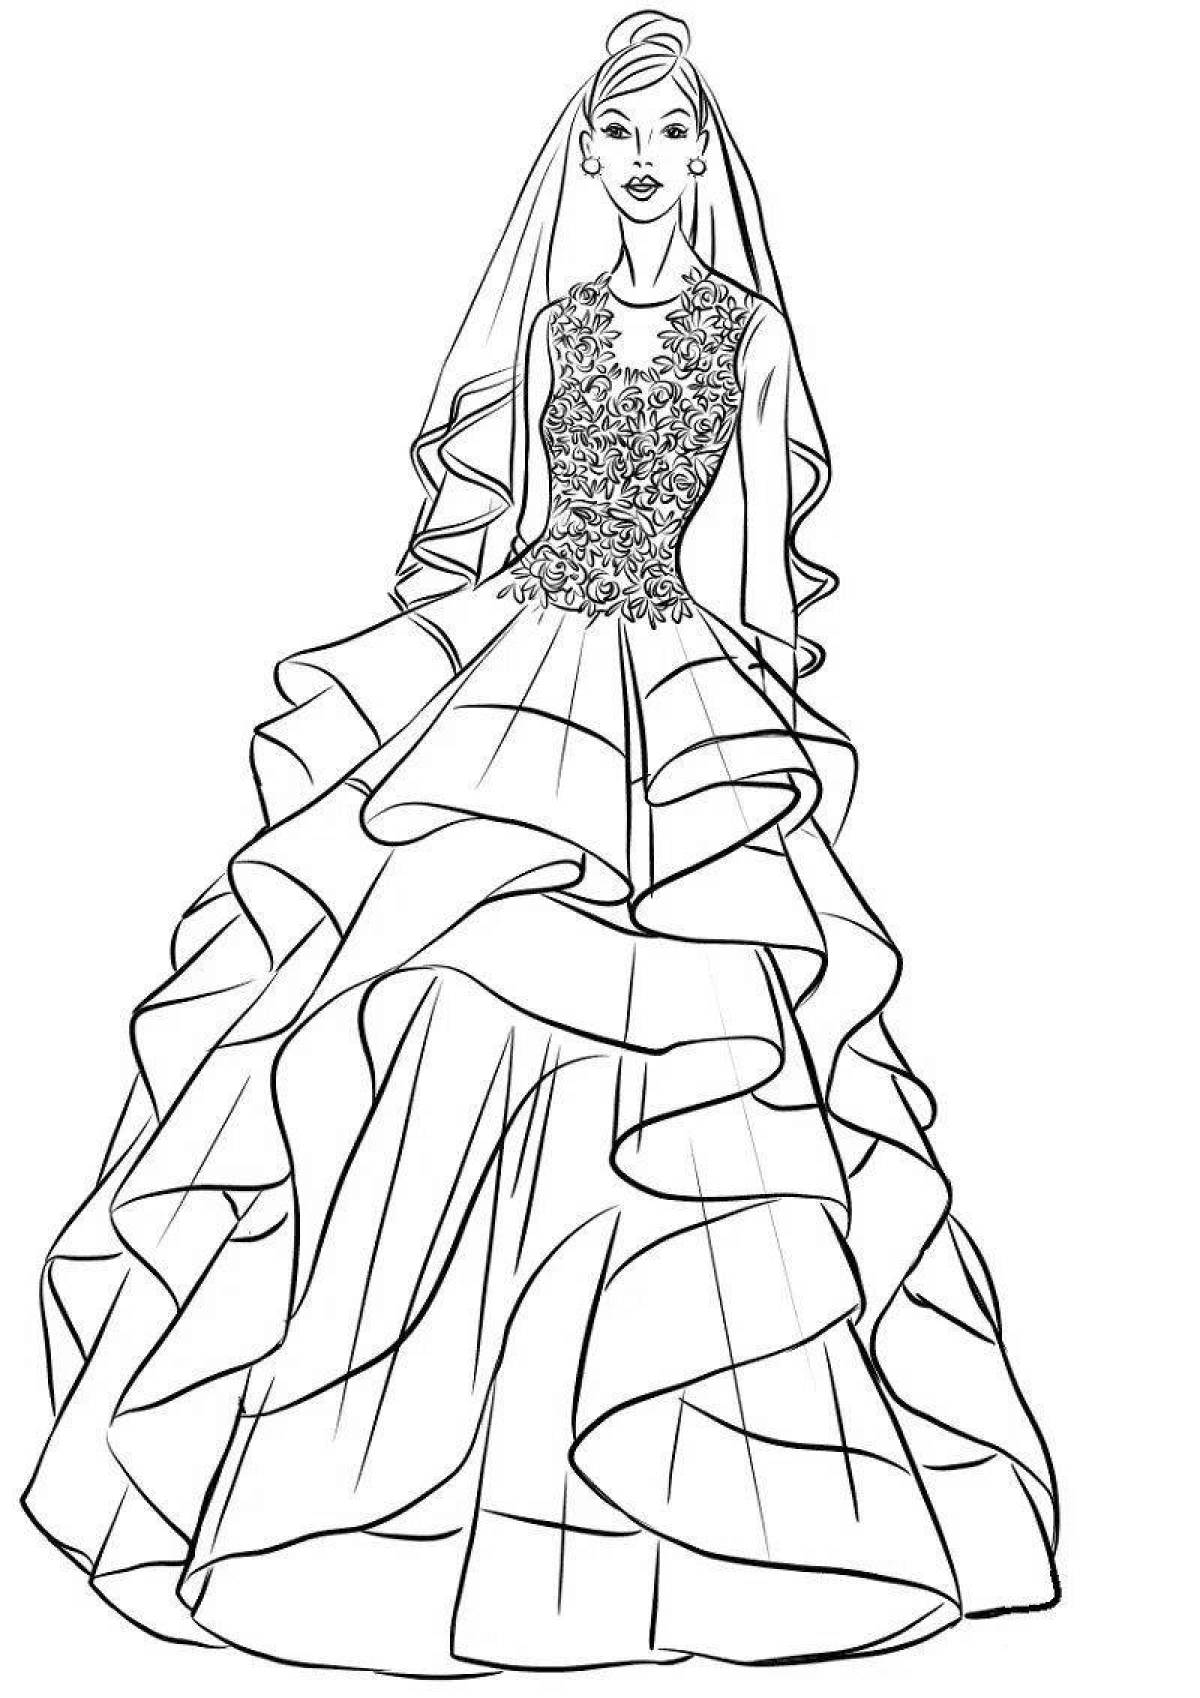 Фото Radiant coloring page свадебное платье